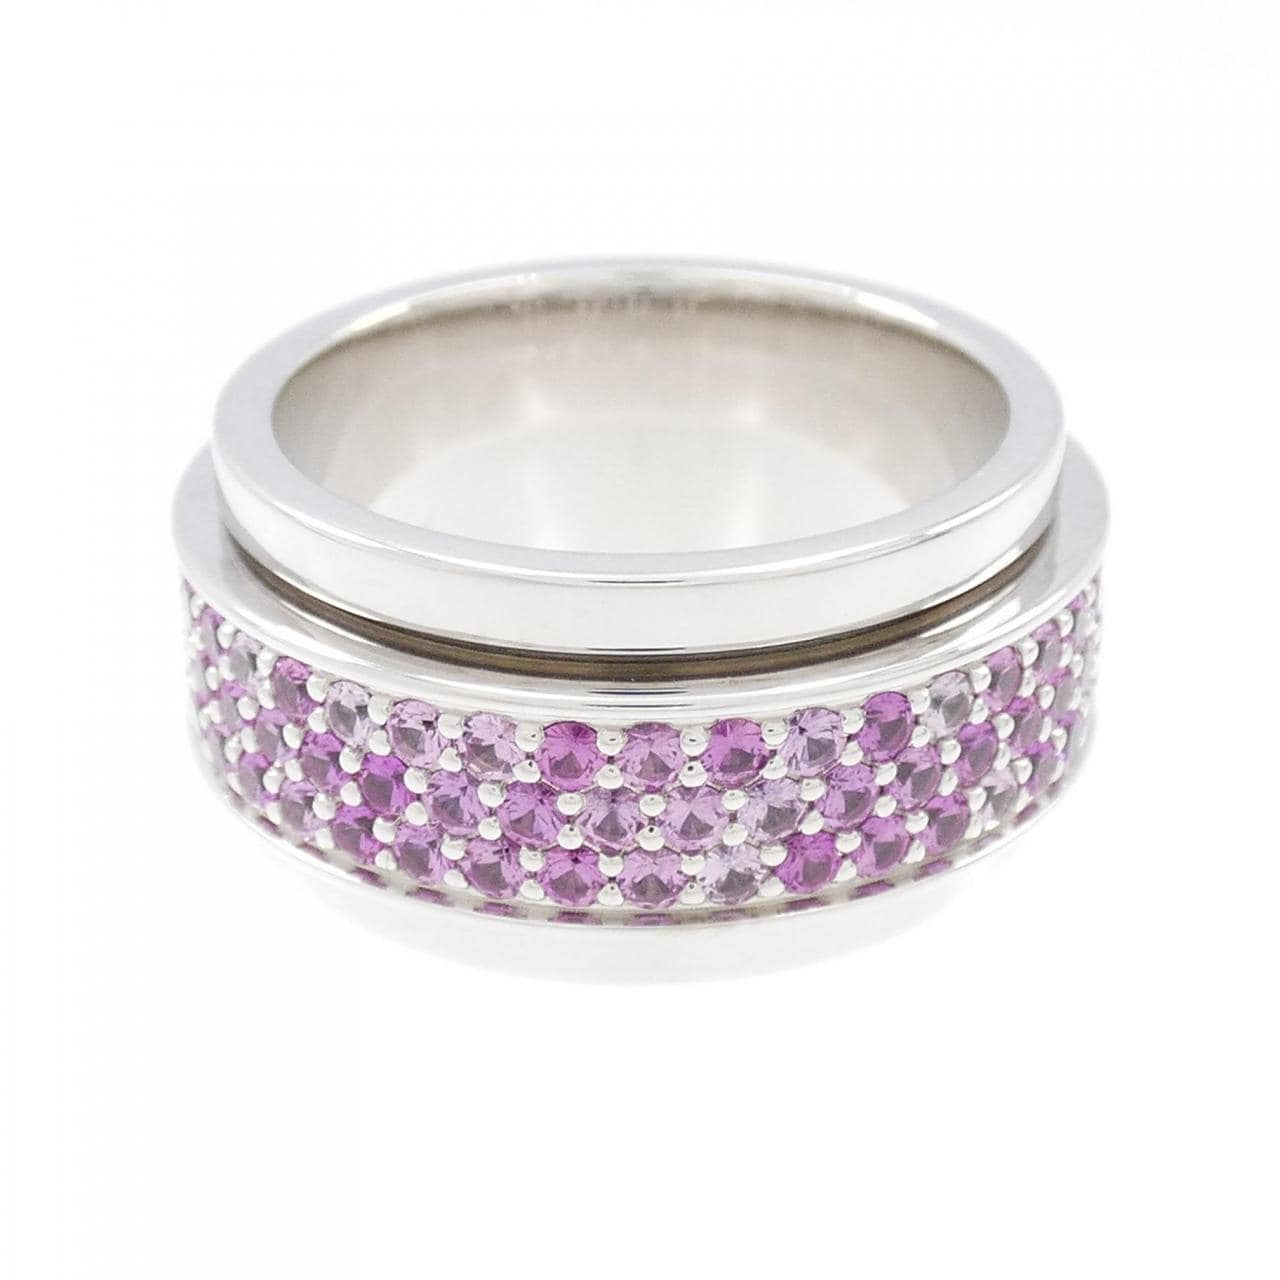 Piaget sapphire ring